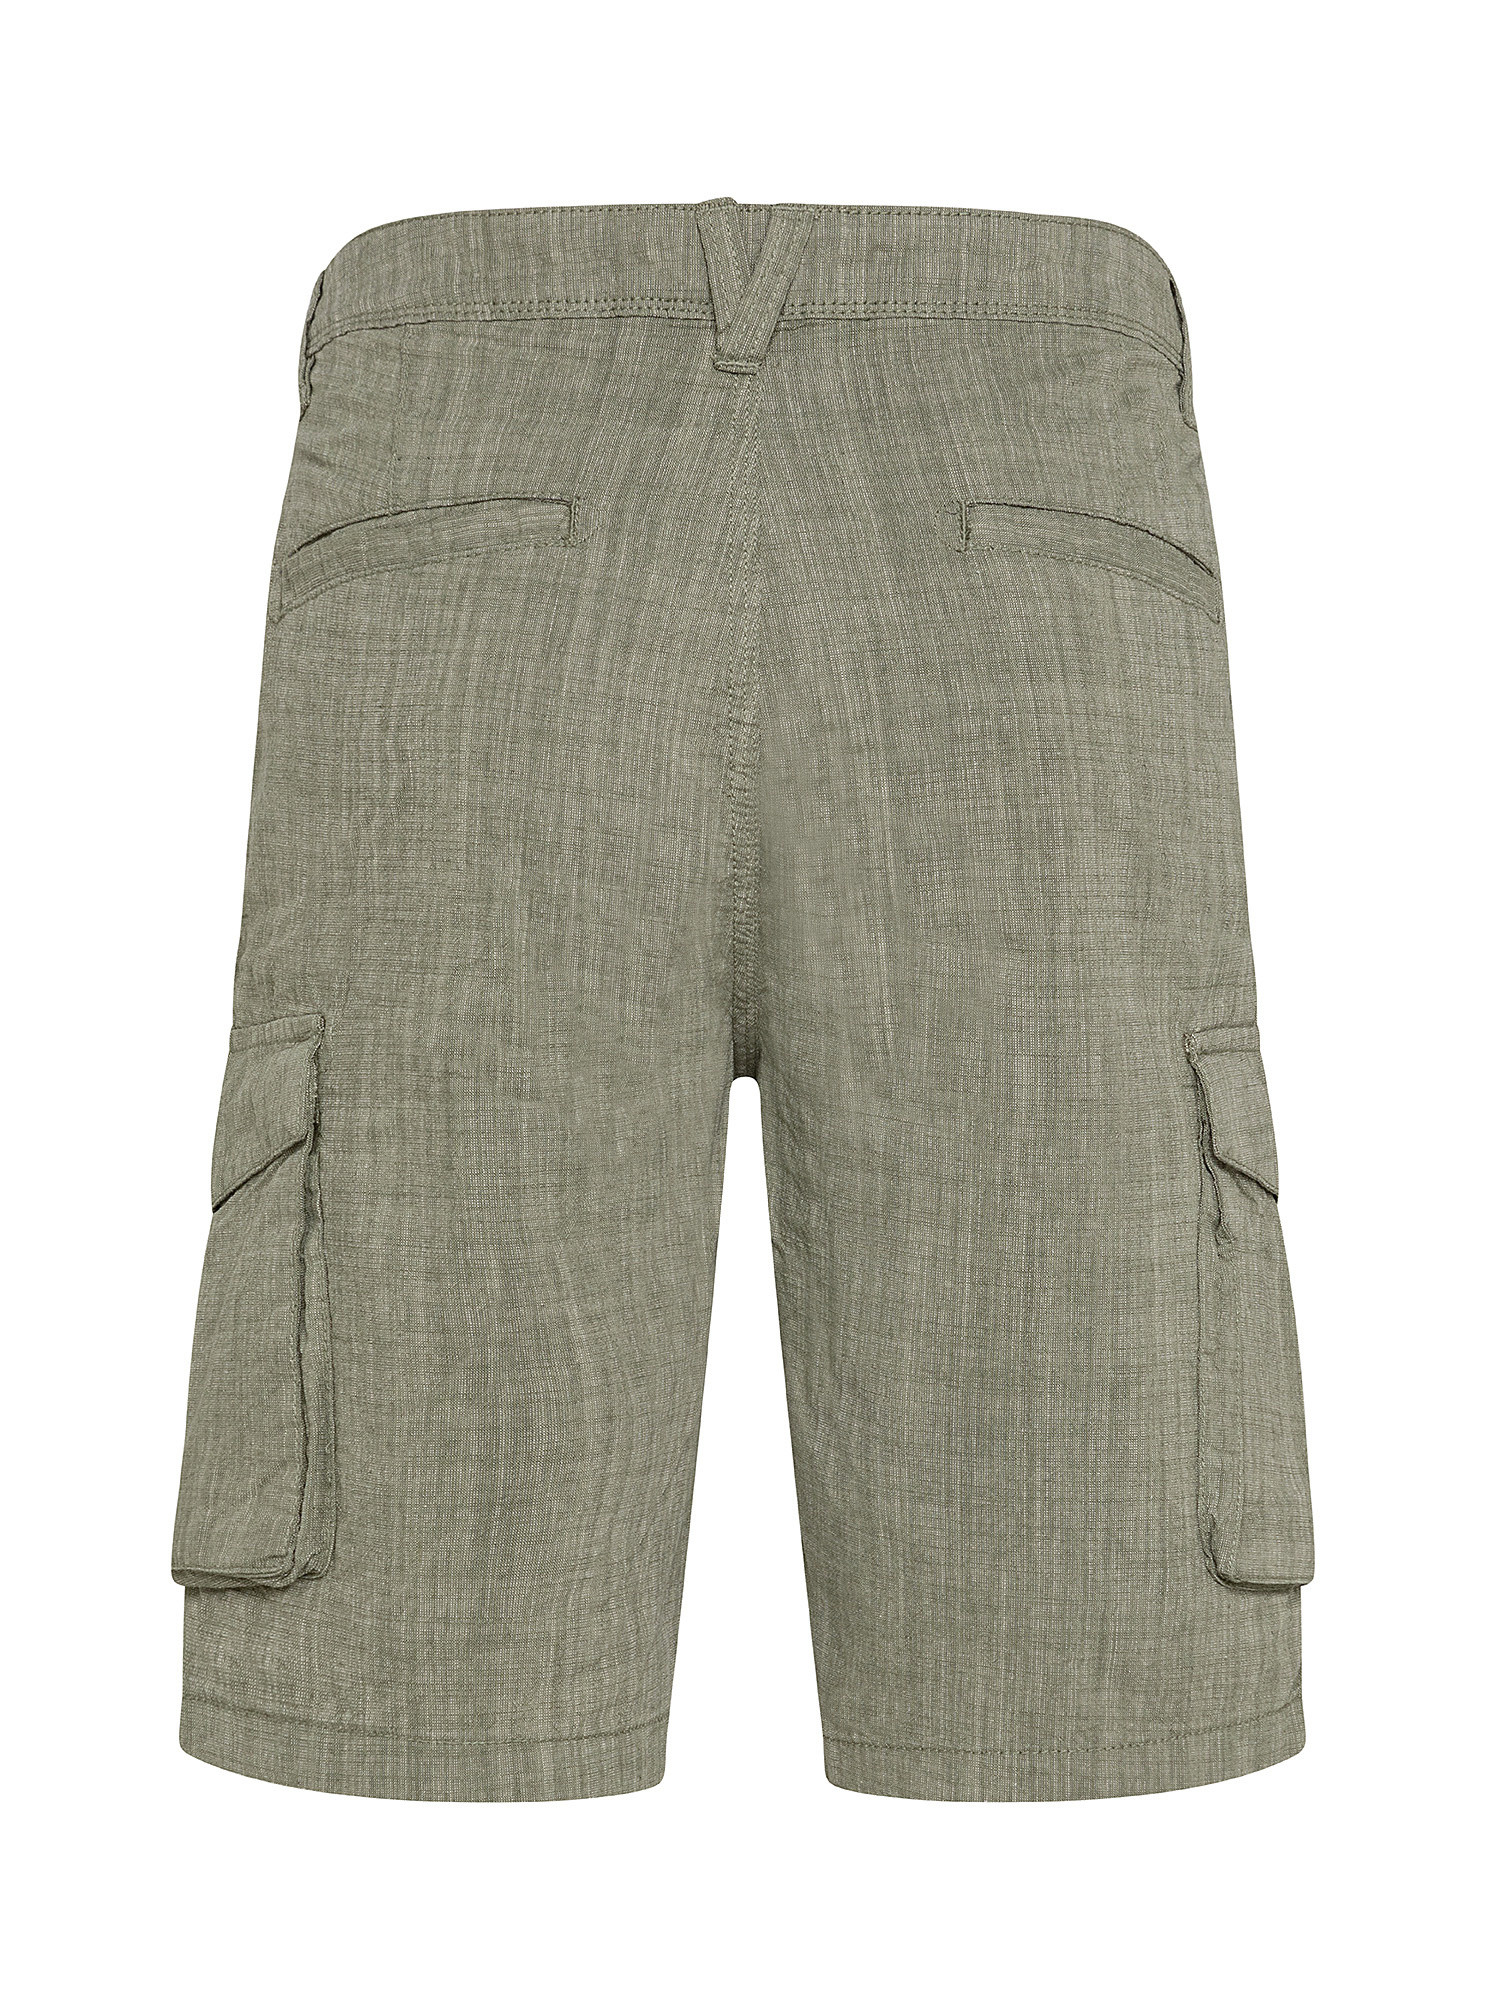 Cargo shorts, Green, large image number 1